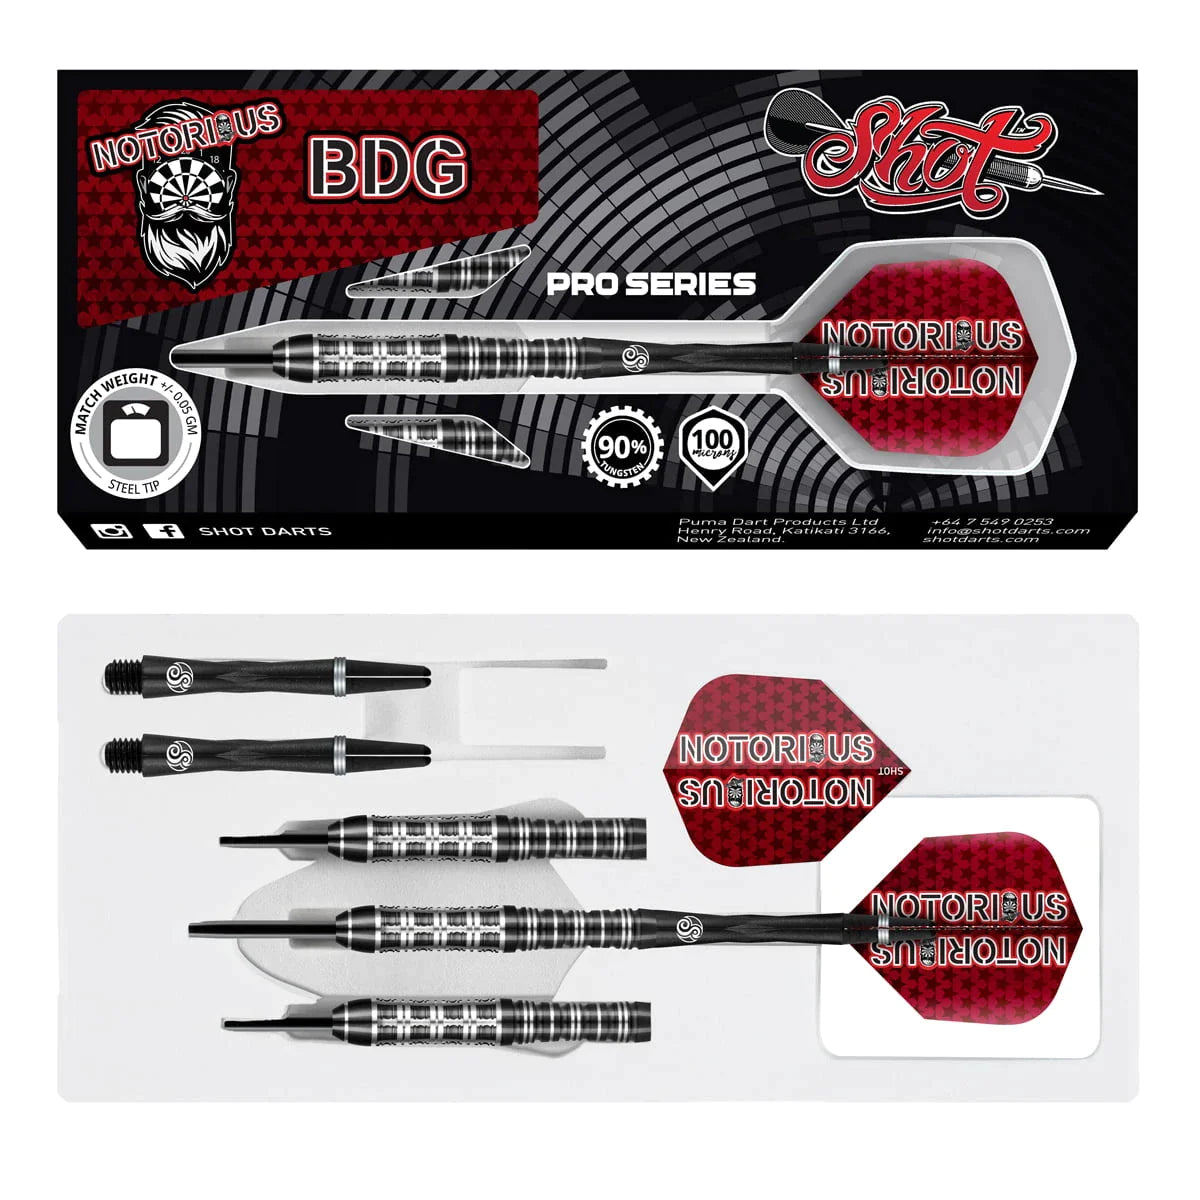 Shot Pro Series Notorious BDG 24g Steel Tip Darts